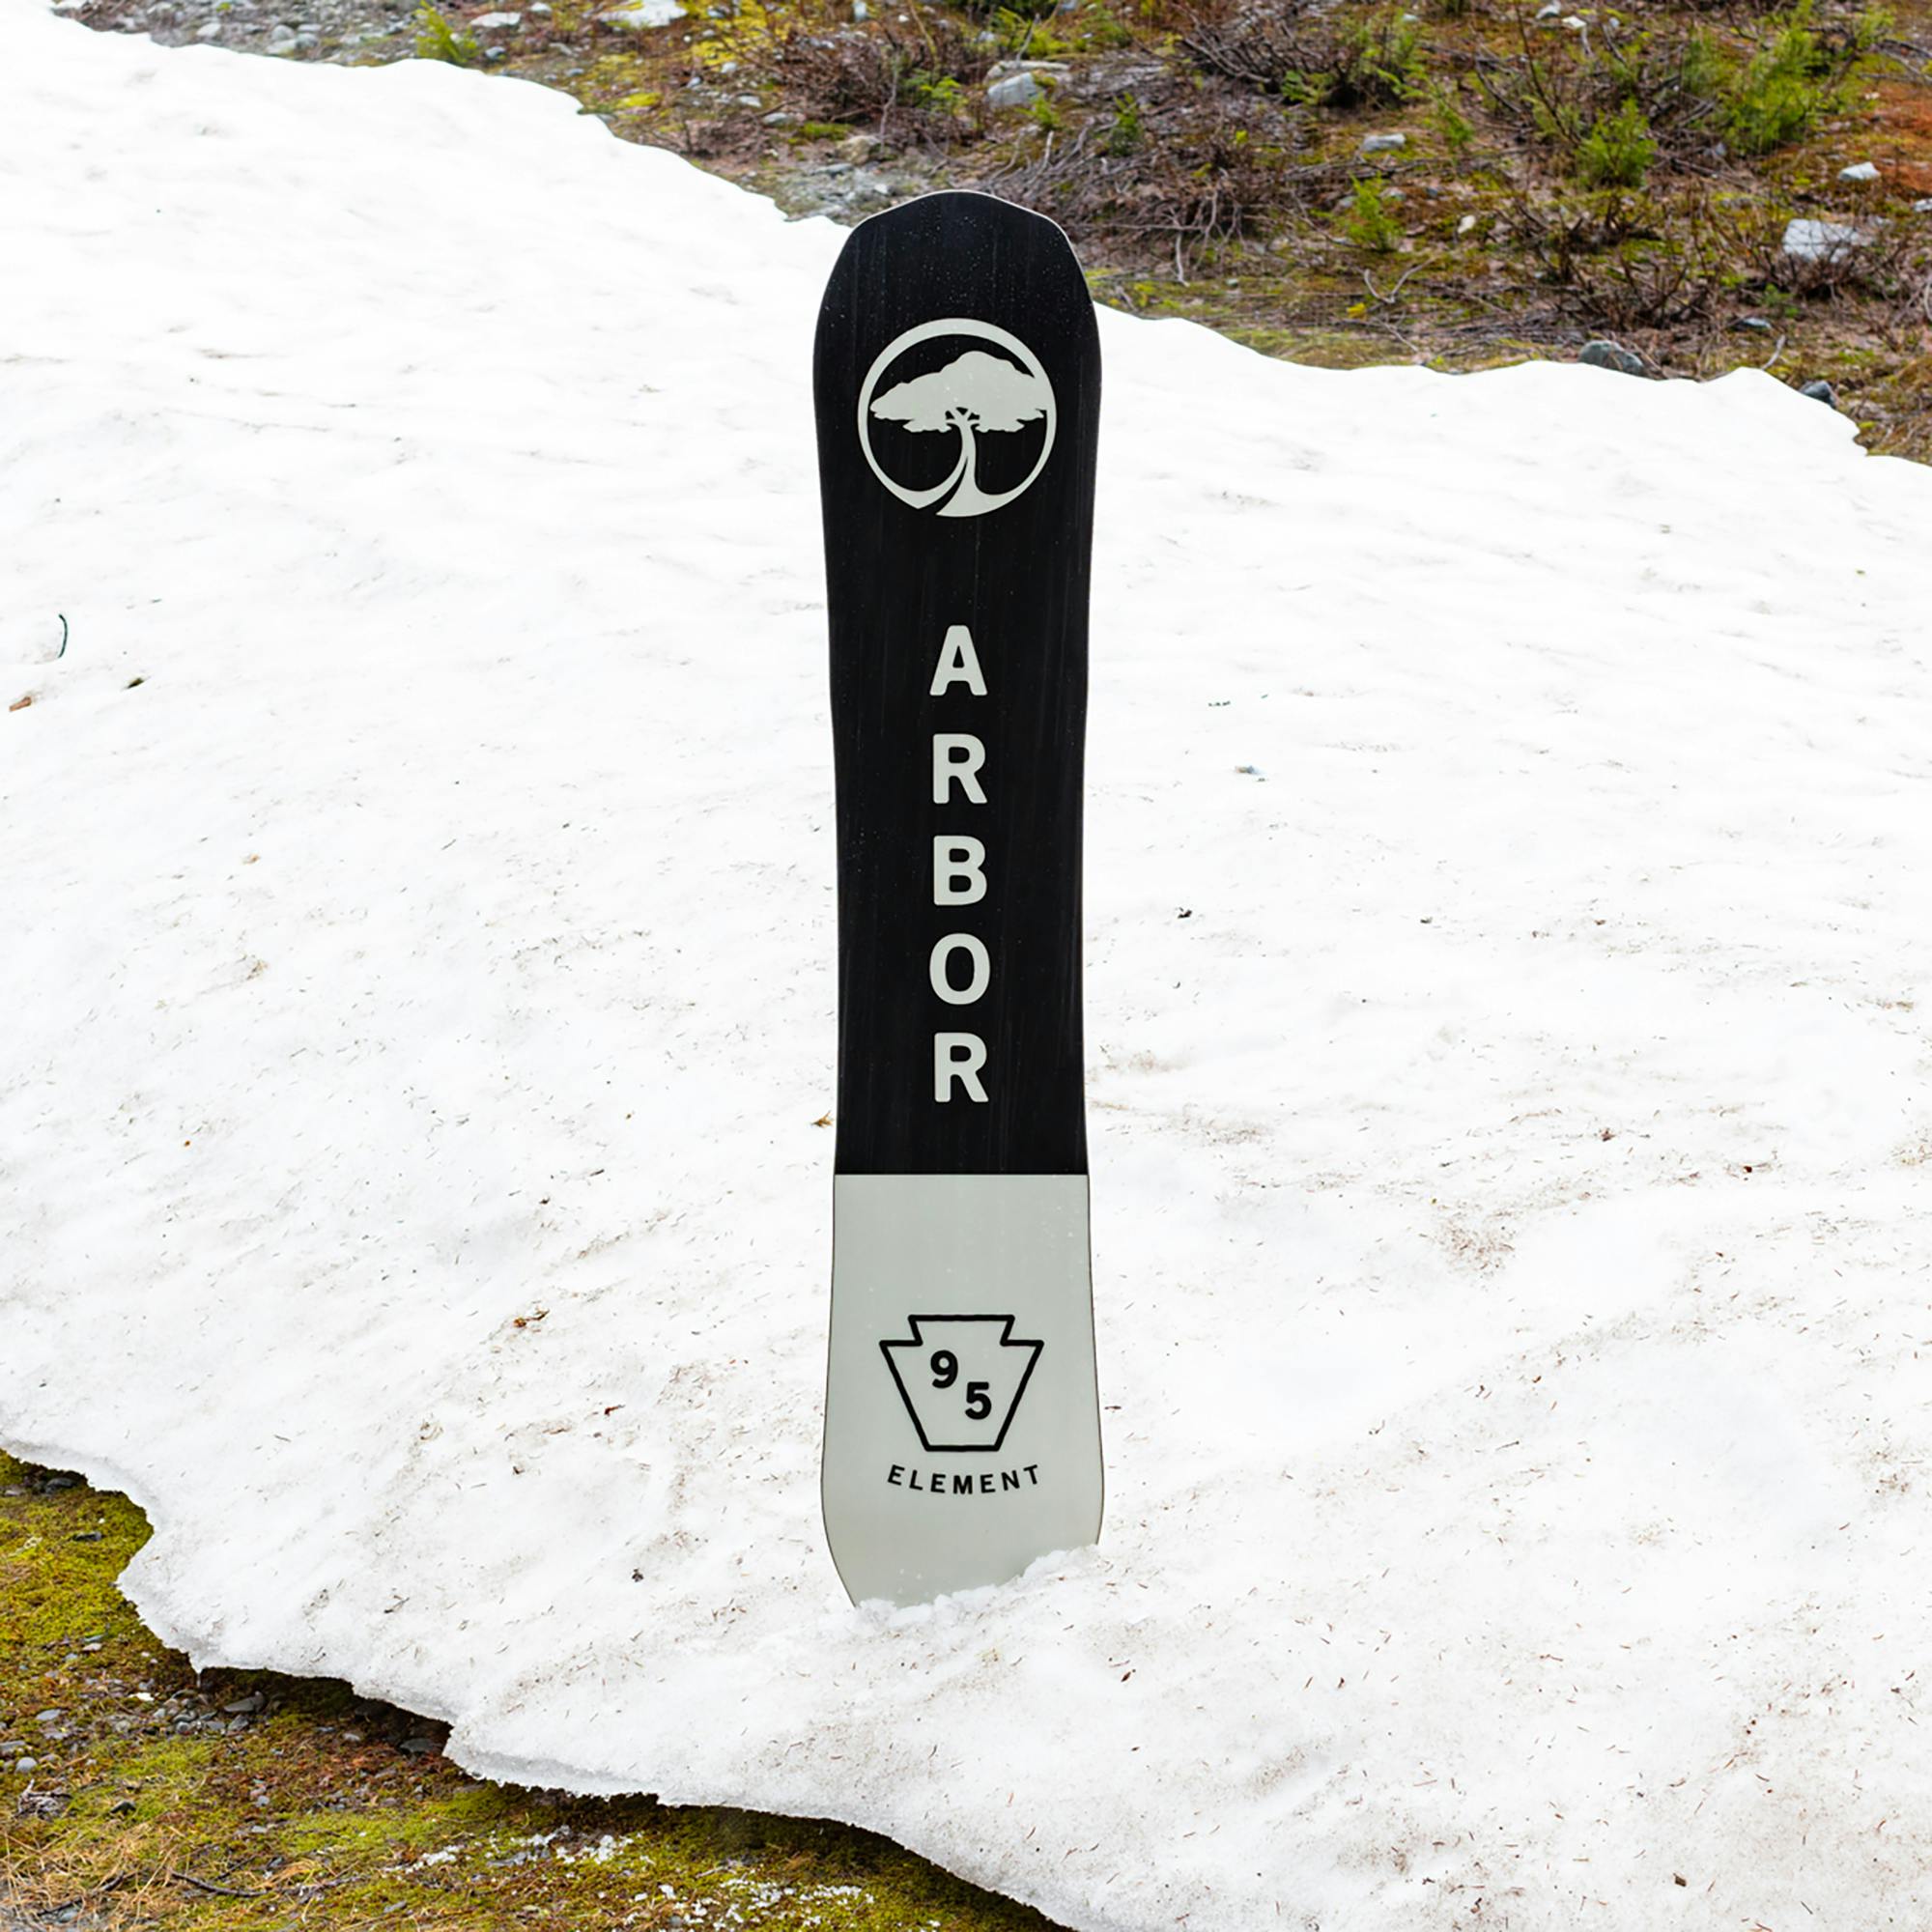 Arbor Element Rocker Snowboard · 2024 · 155 cm